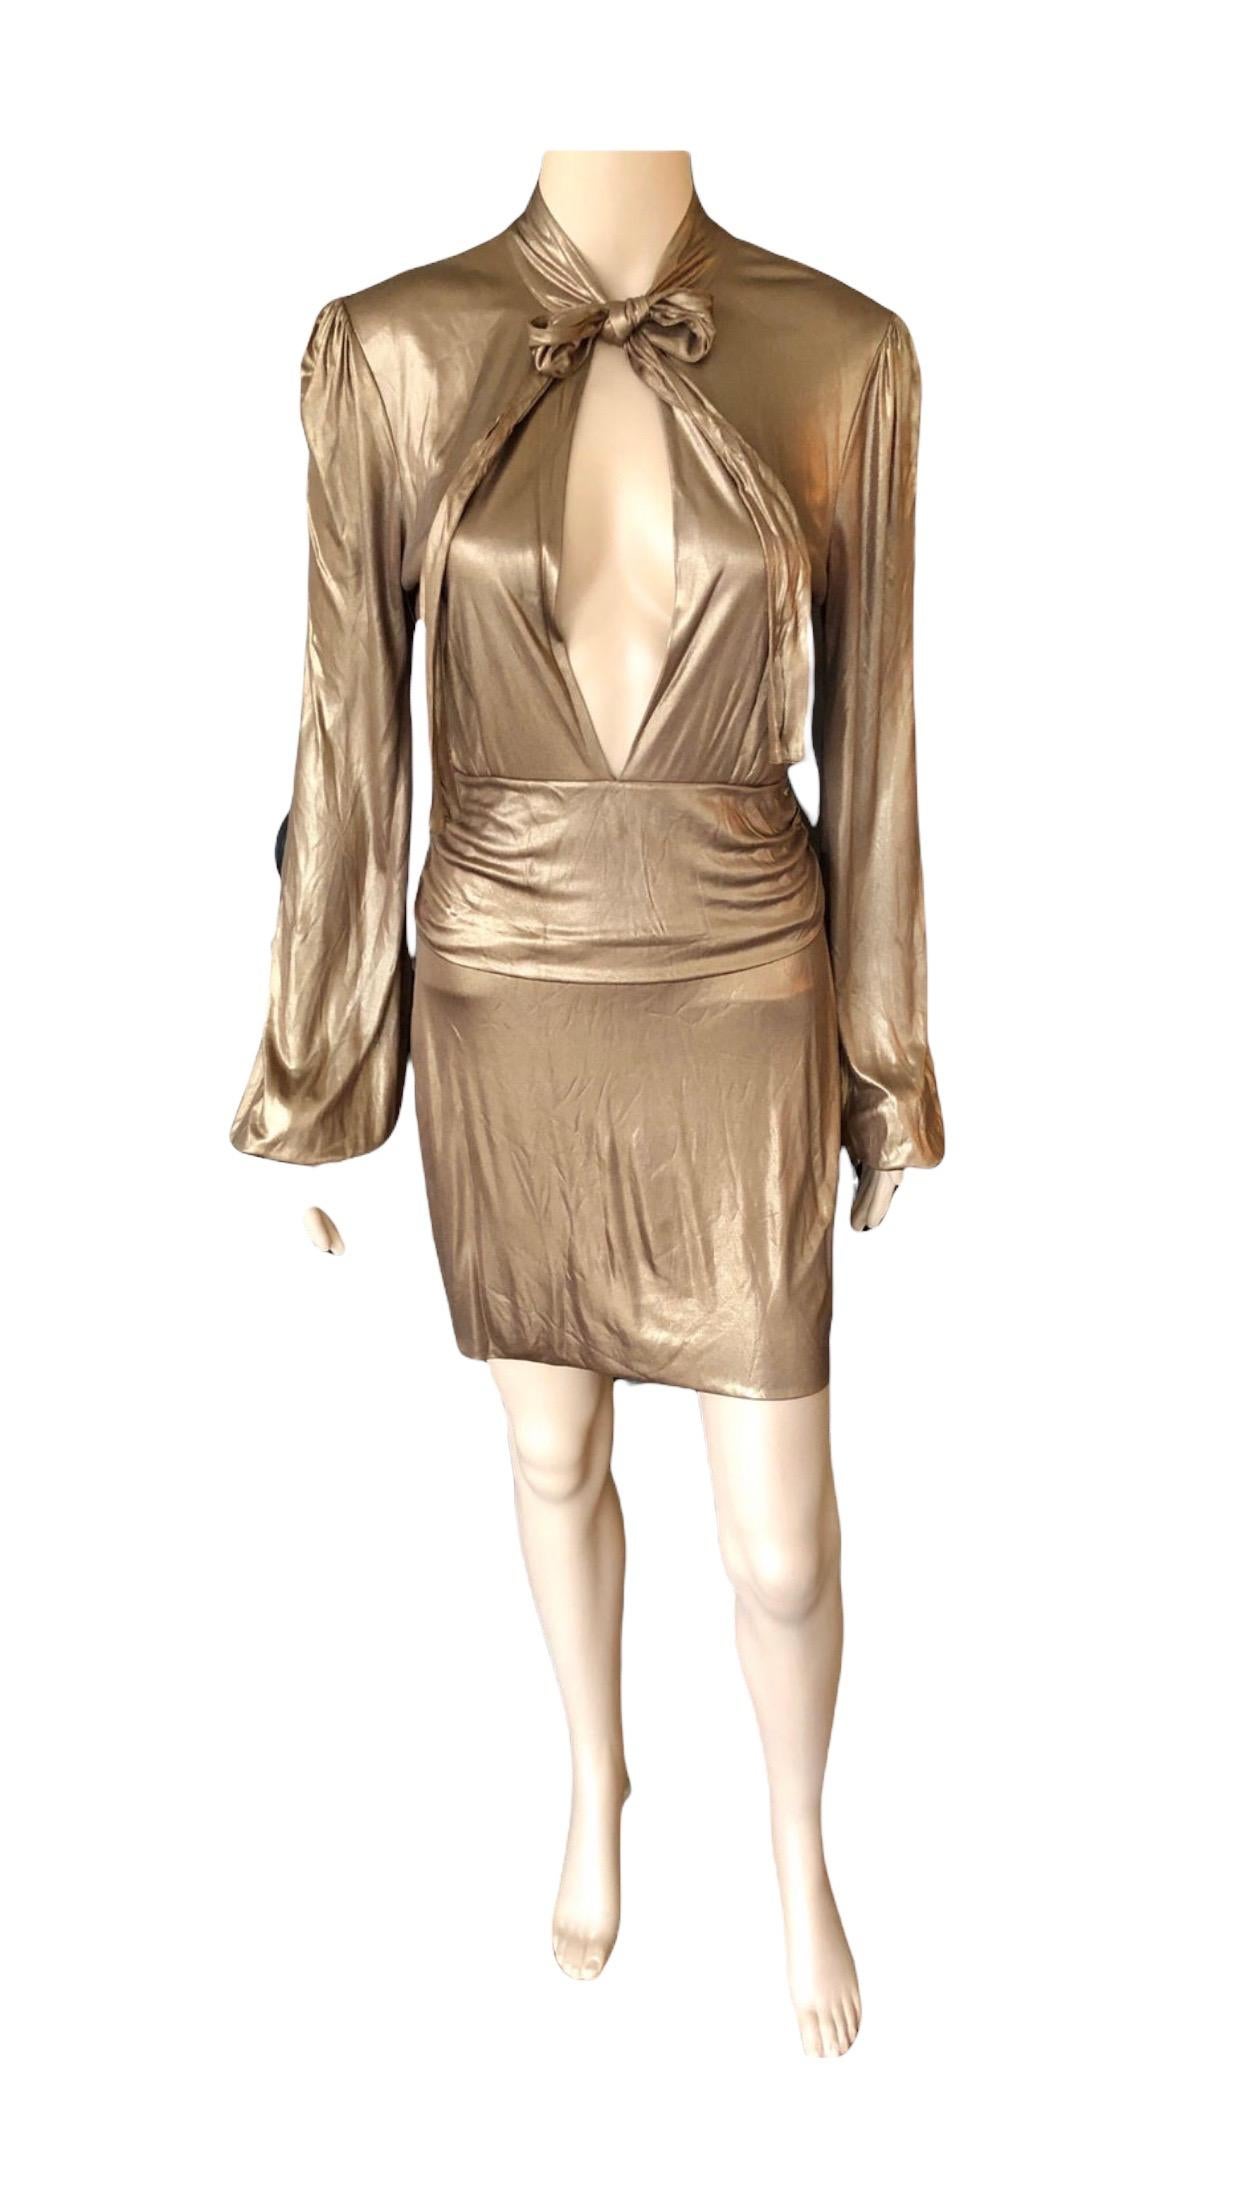 Women's or Men's Gucci F/W 2006 Runway Plunging Neckline Gold Metallic Mini Dress